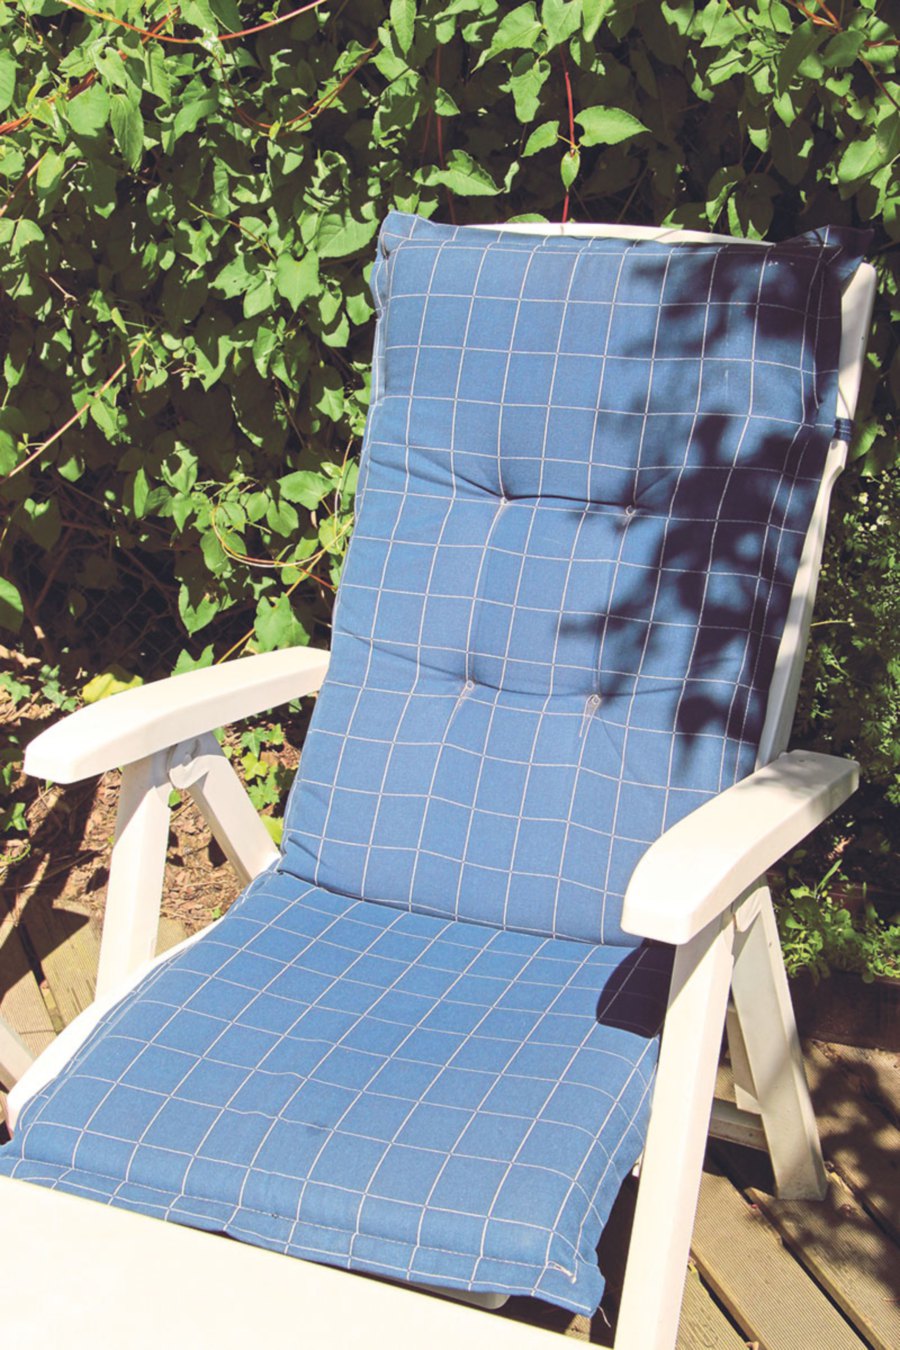 Beach-style deck chairs.